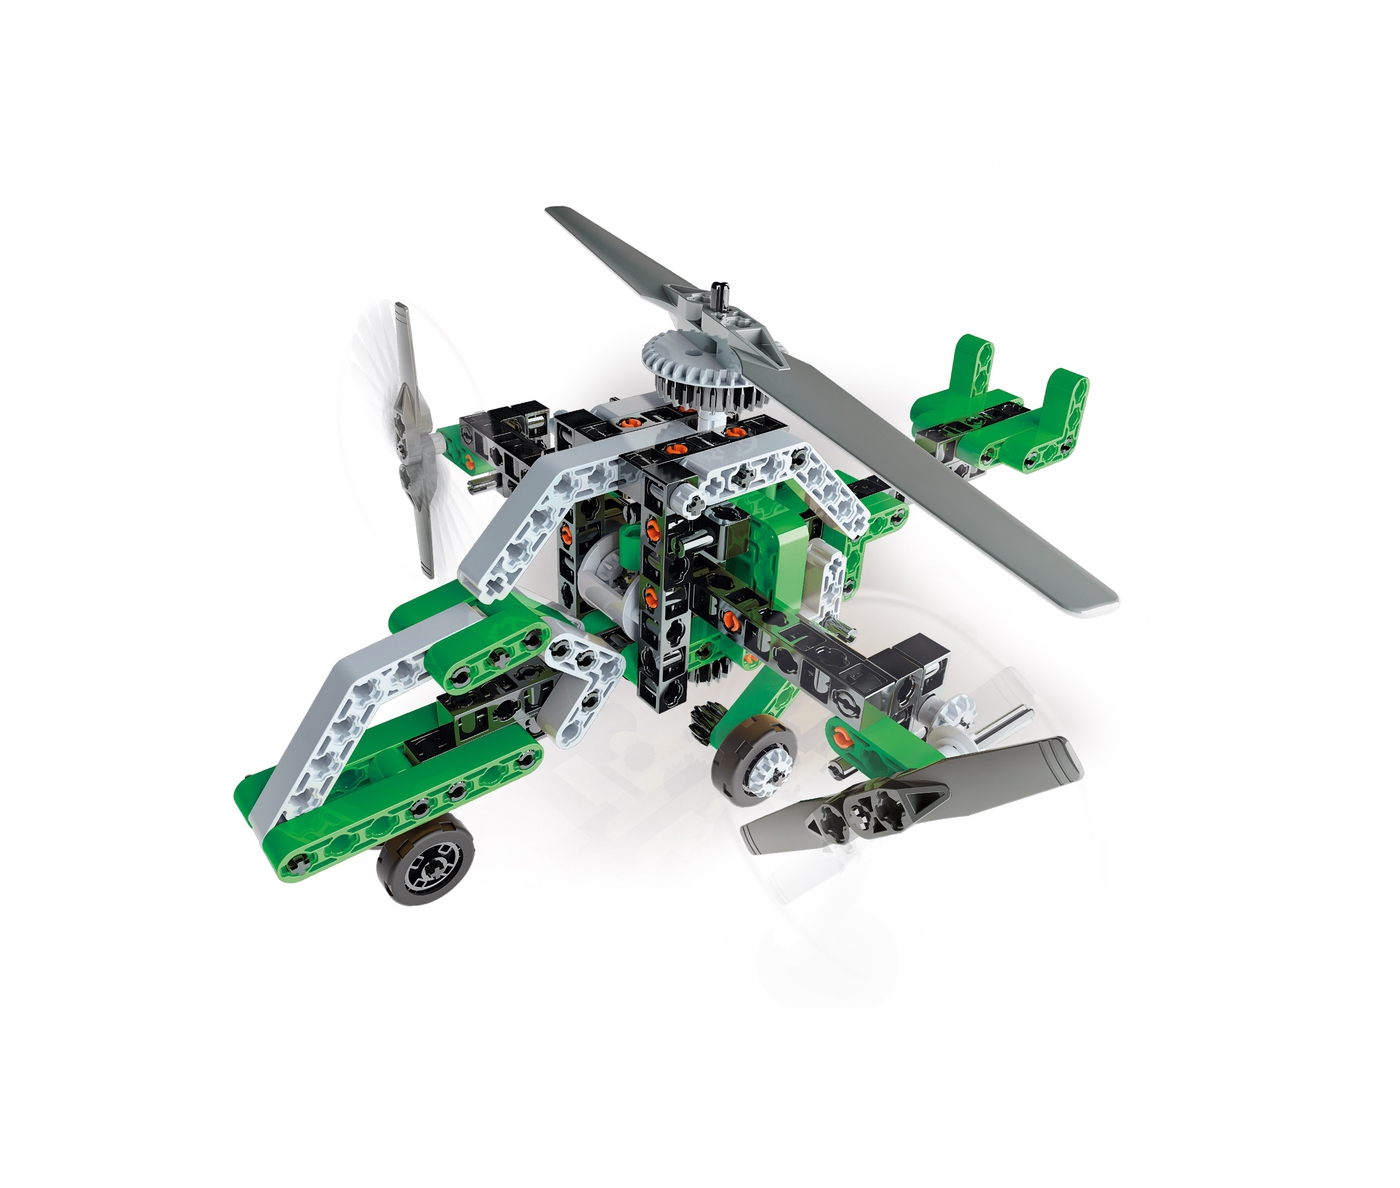 Clementoni Mechanic Laboratory Aeroplanes & Helicopters Construction Kit Toy NEW 